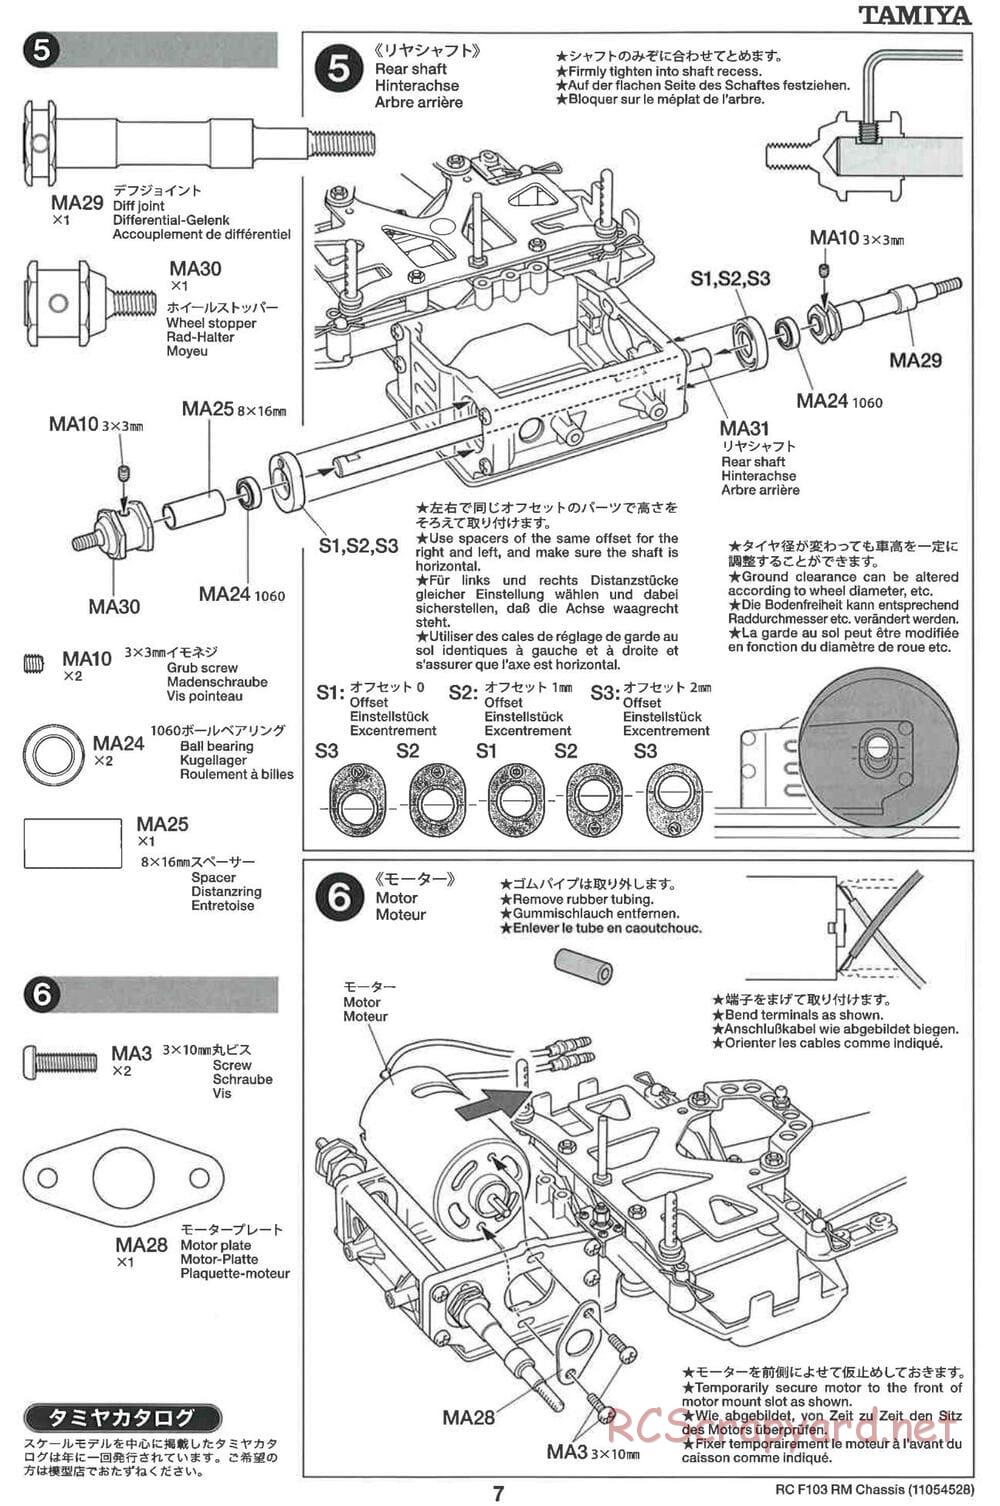 Tamiya - F103RM Chassis - Manual - Page 7